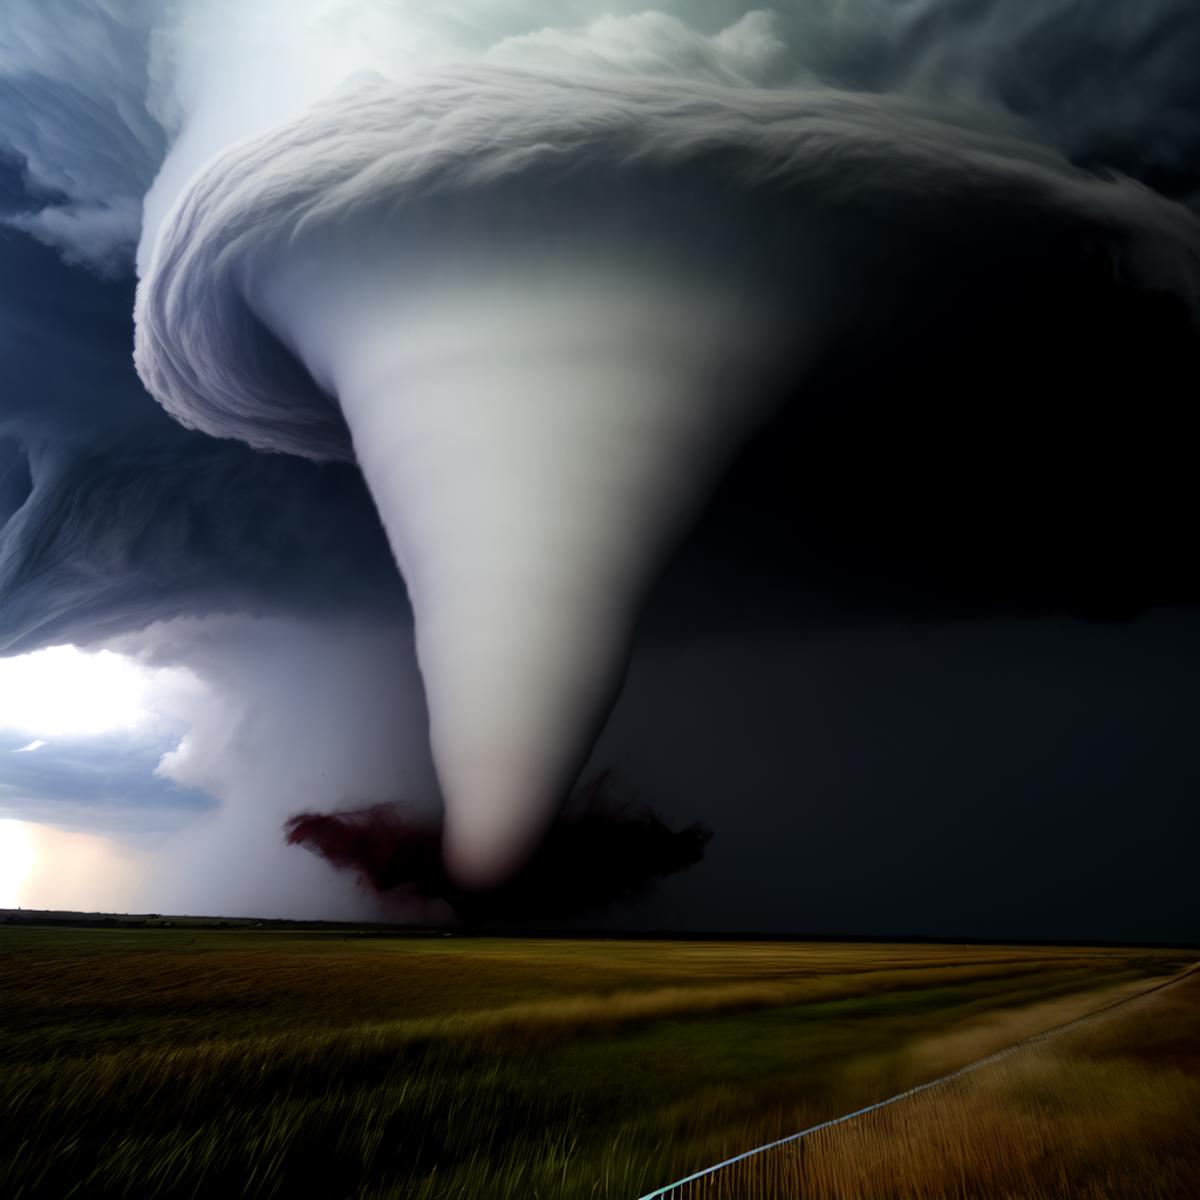 Tornado image by BlueM